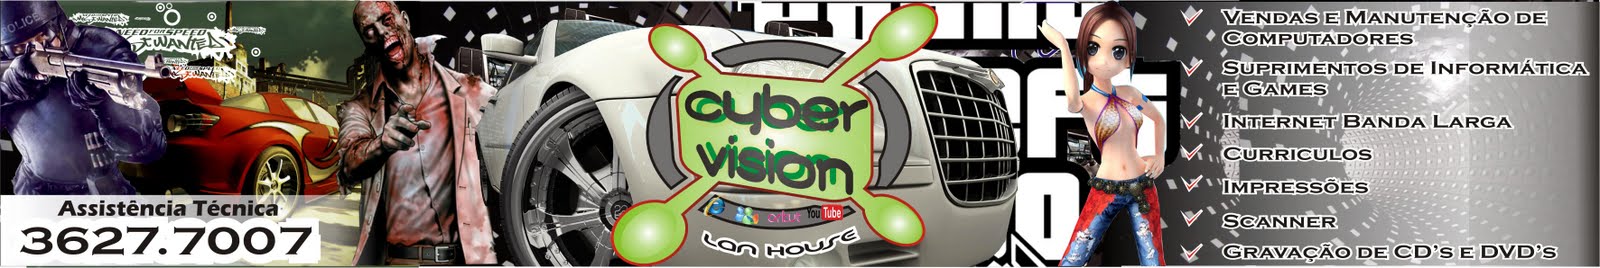 Cyber Vision Lan-House